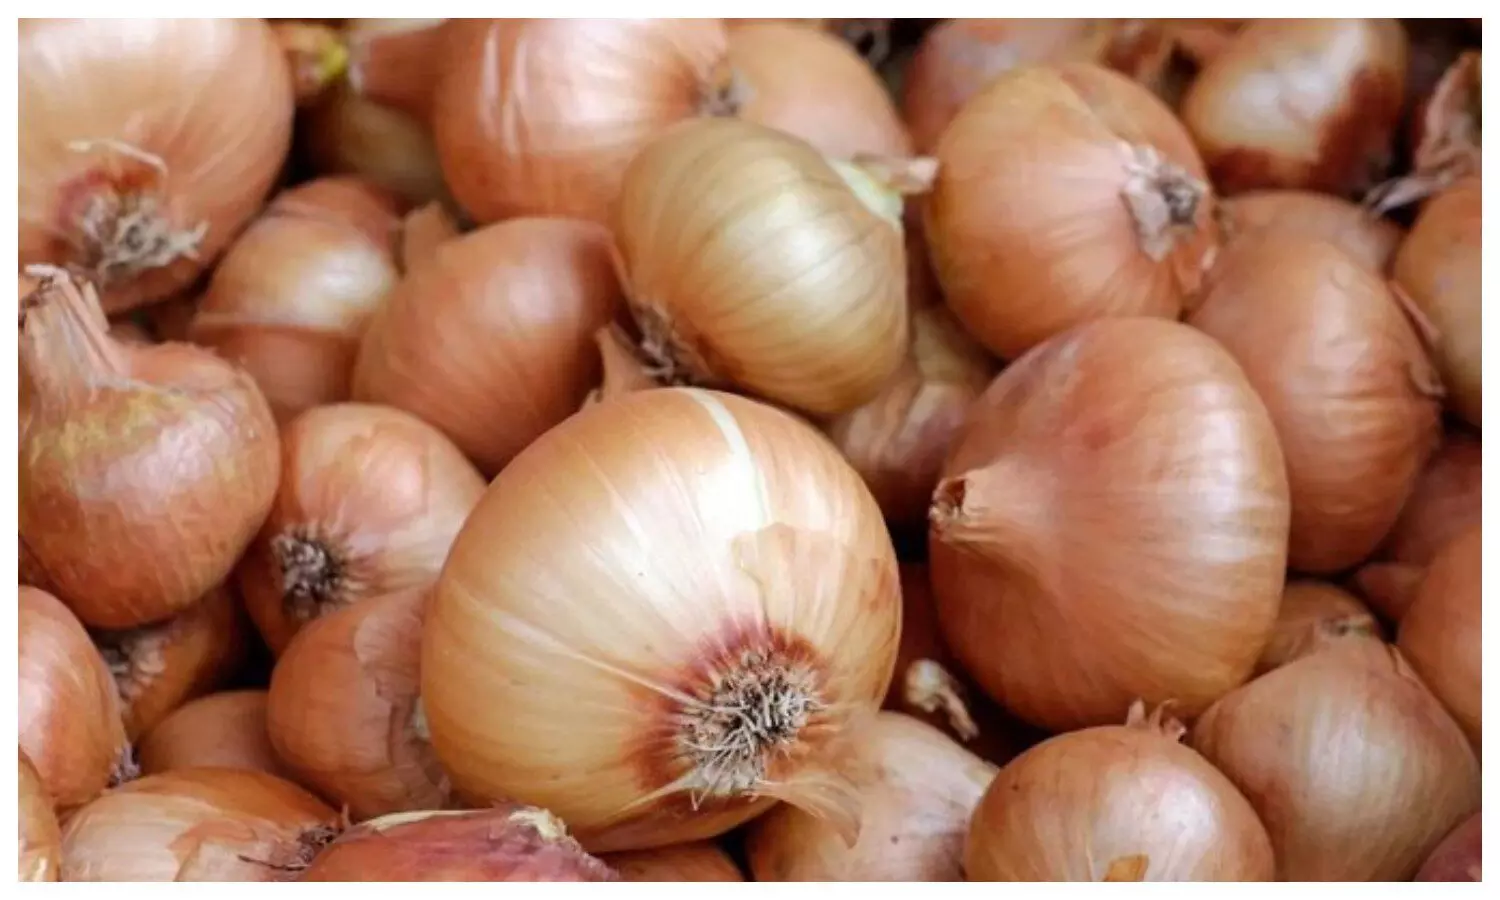 Onion price